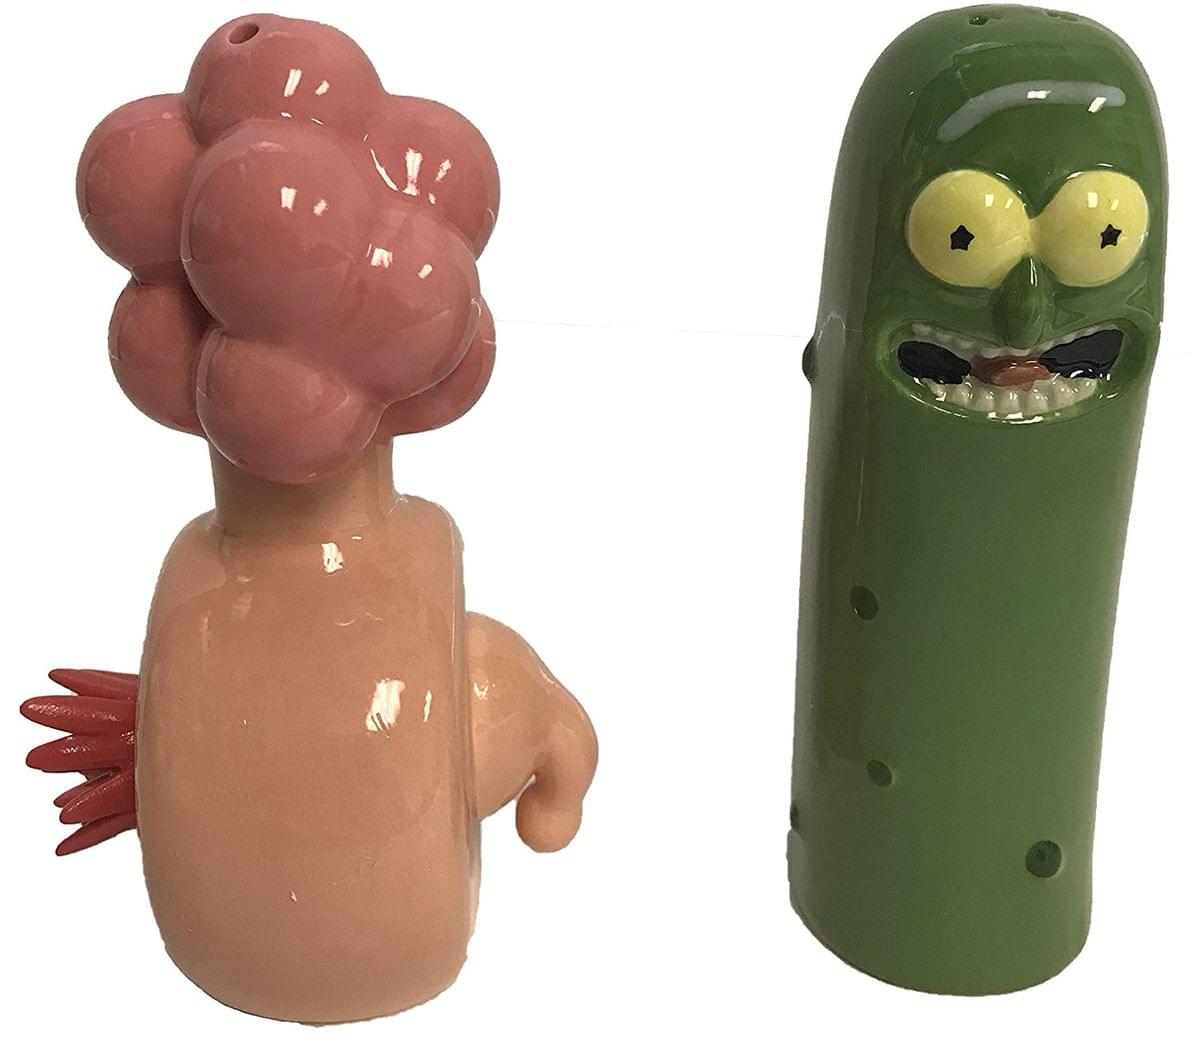 Rick and Morty Plumbus/ Pickle Rick Salt and Pepper Shaker Set